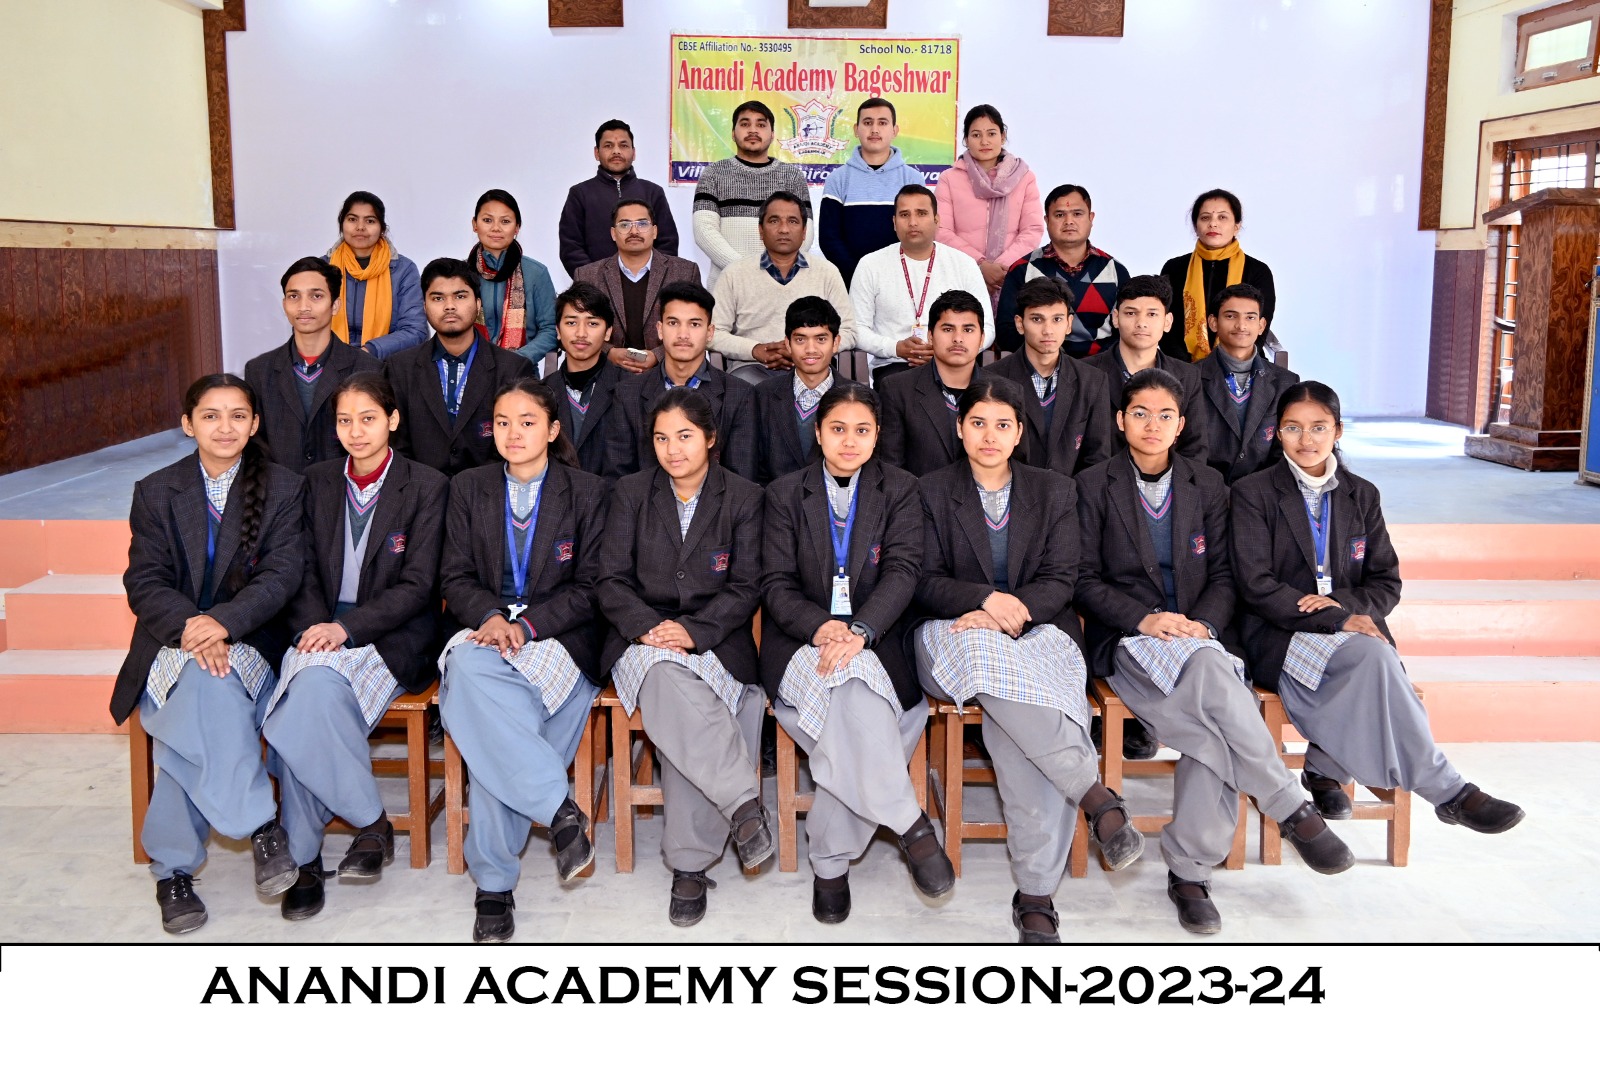 Welcome to Anandi Academy